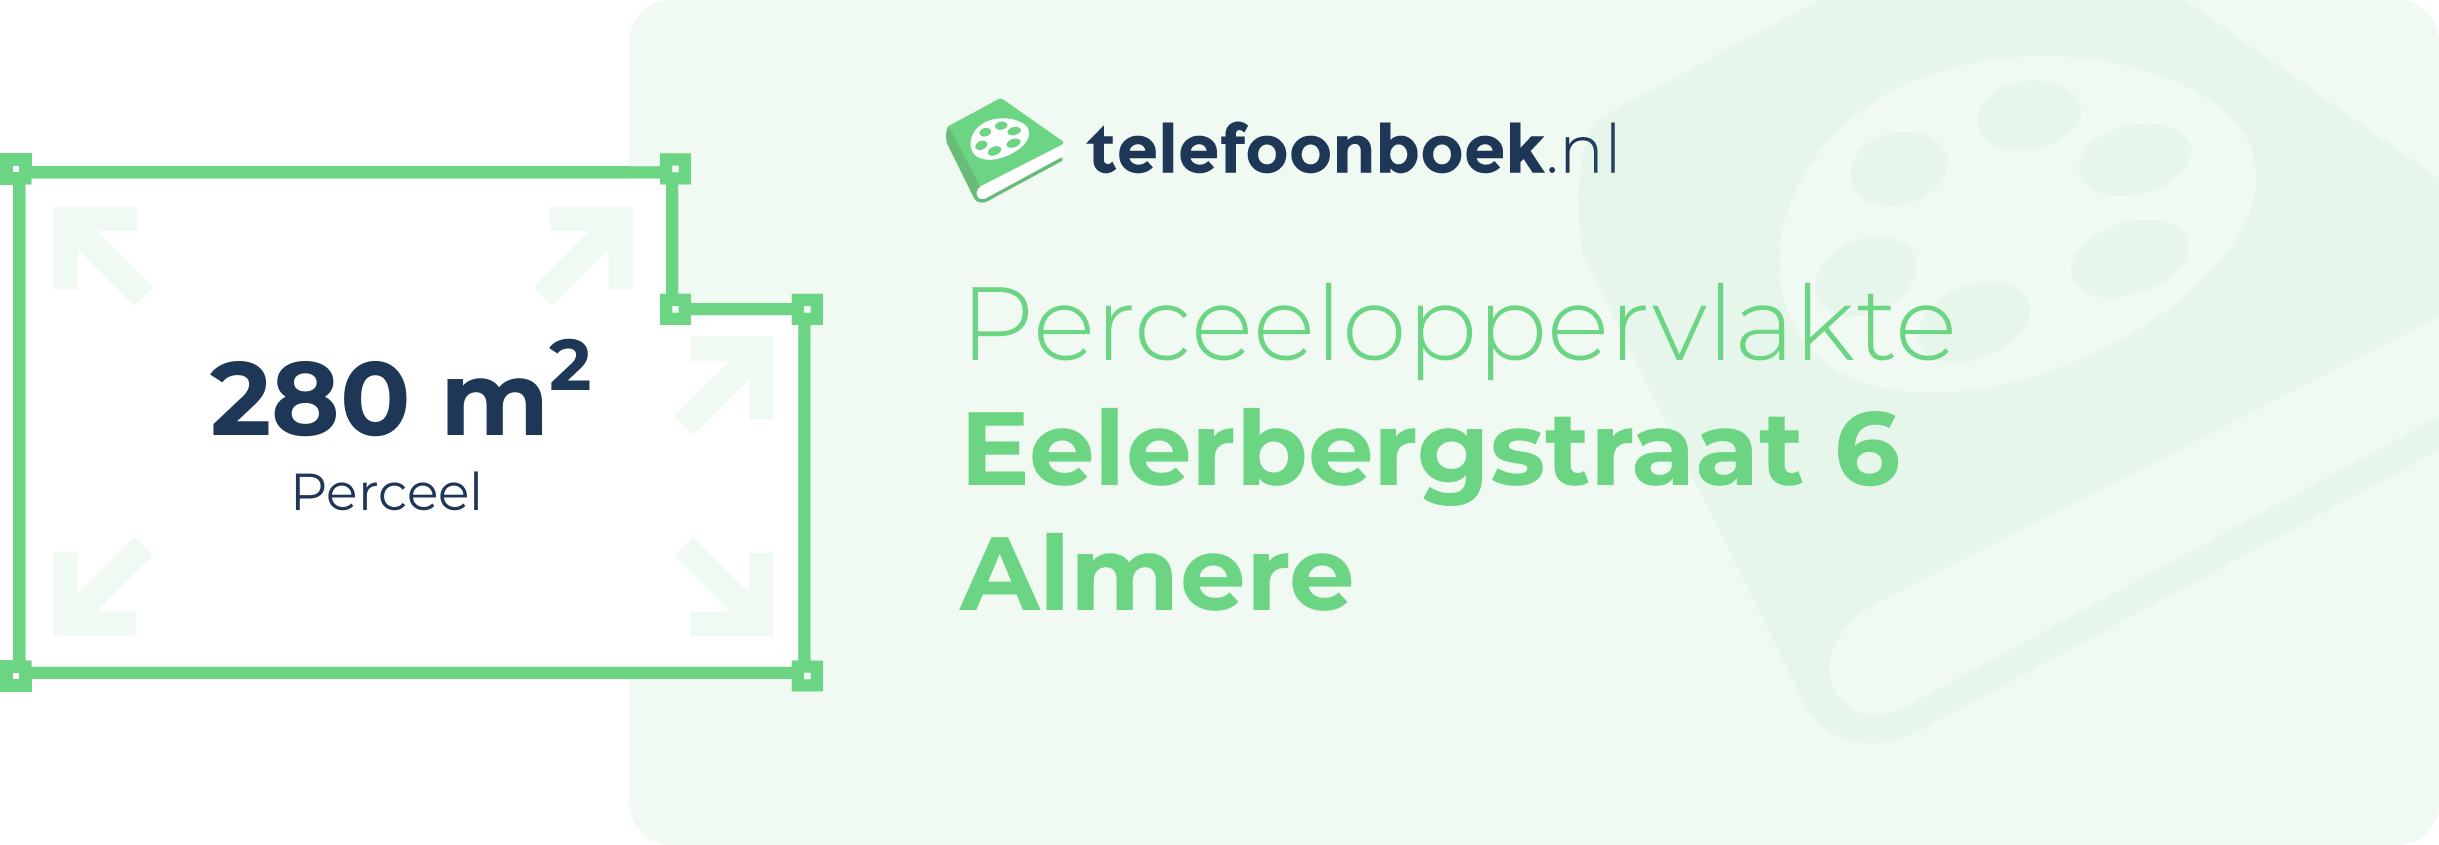 Perceeloppervlakte Eelerbergstraat 6 Almere